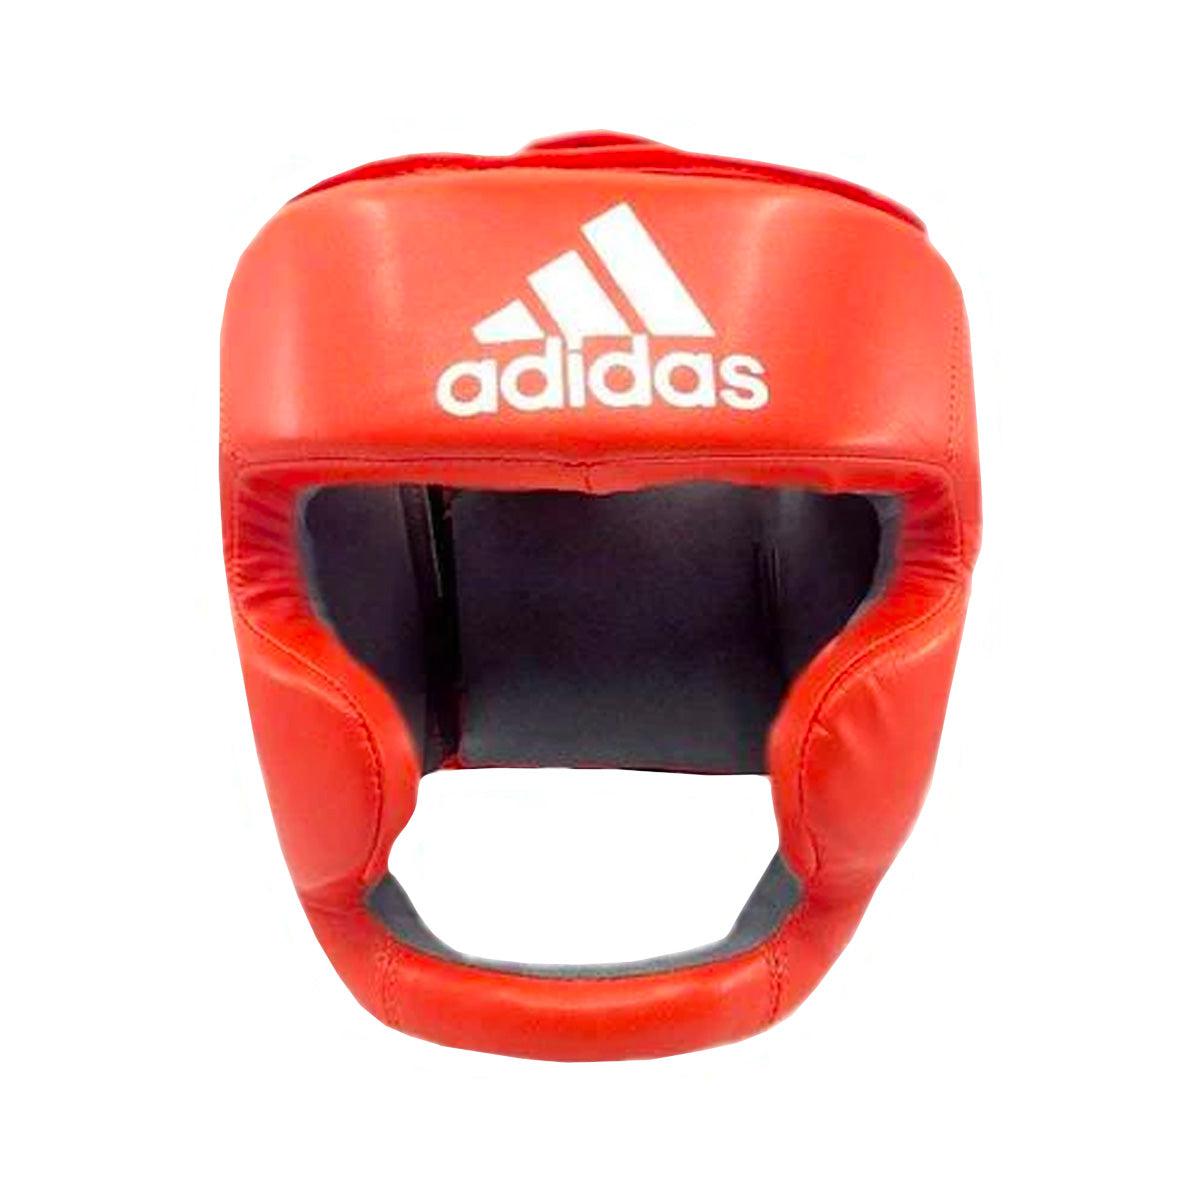 Adidas Training-Protection-Adidas®-S- HelmetCanada Fighting